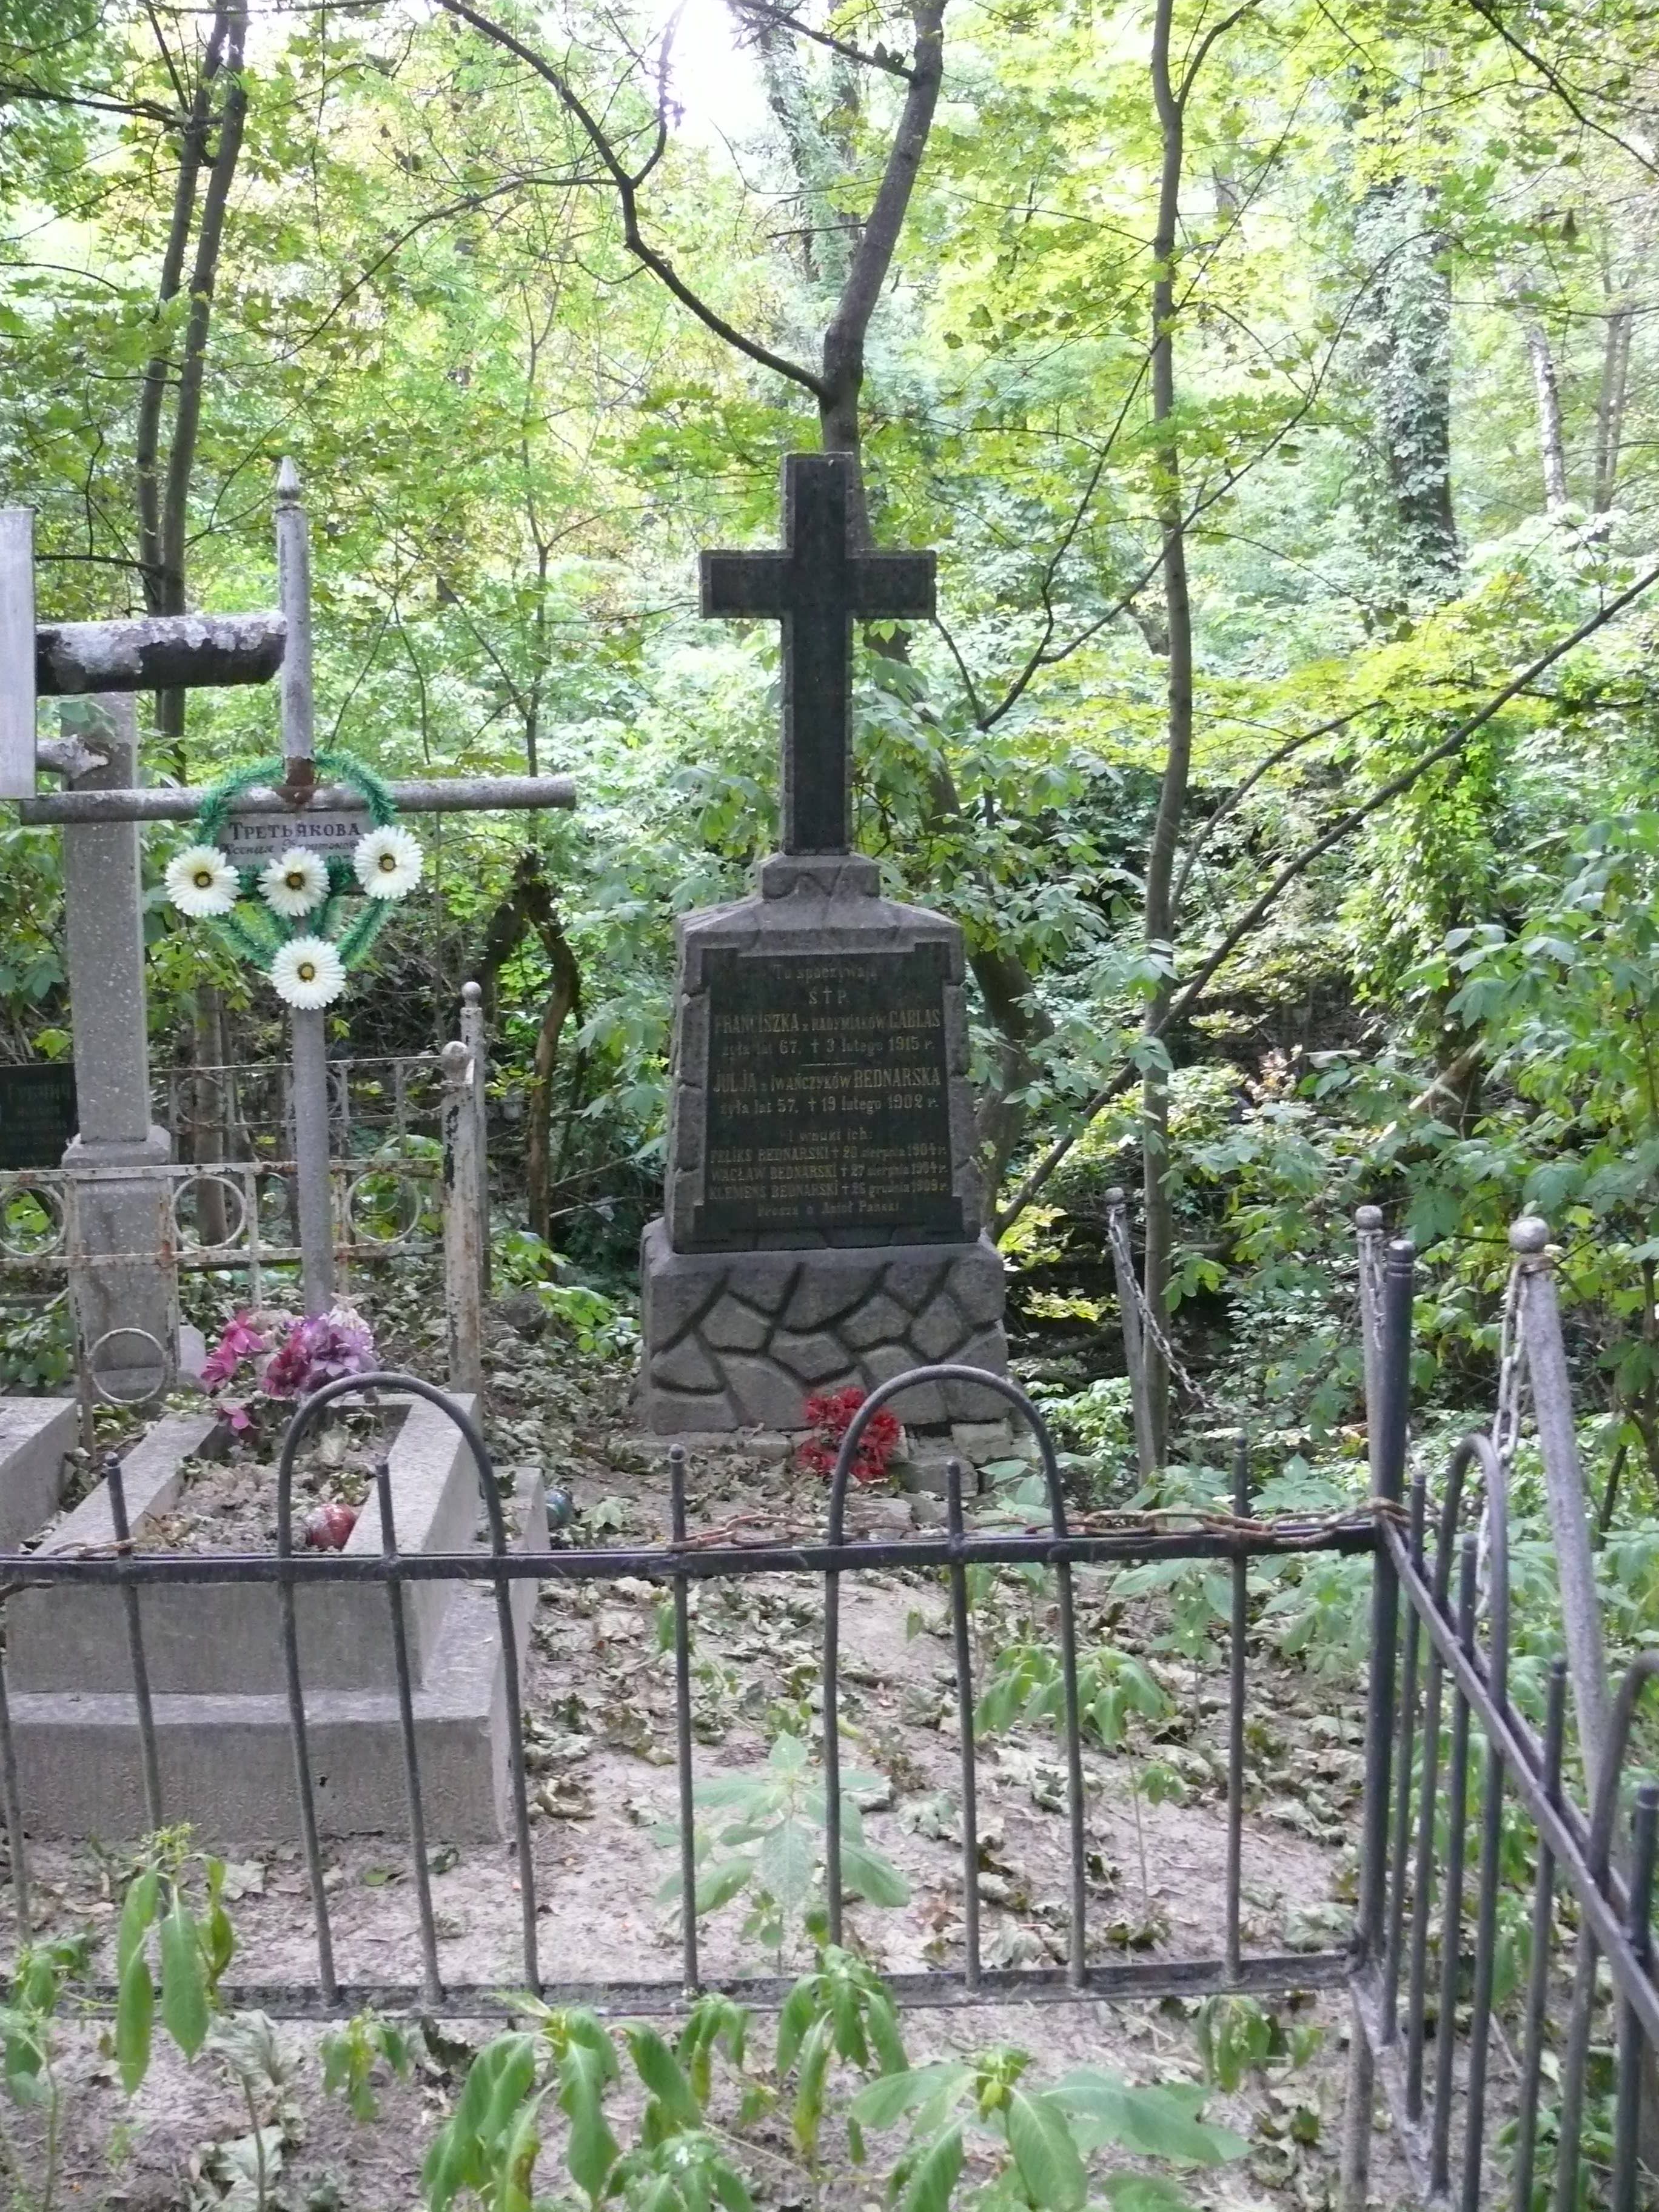 Tombstone of Franciszka Gablas, Julia, Feliks, Waclaw and Klemens Bednarski